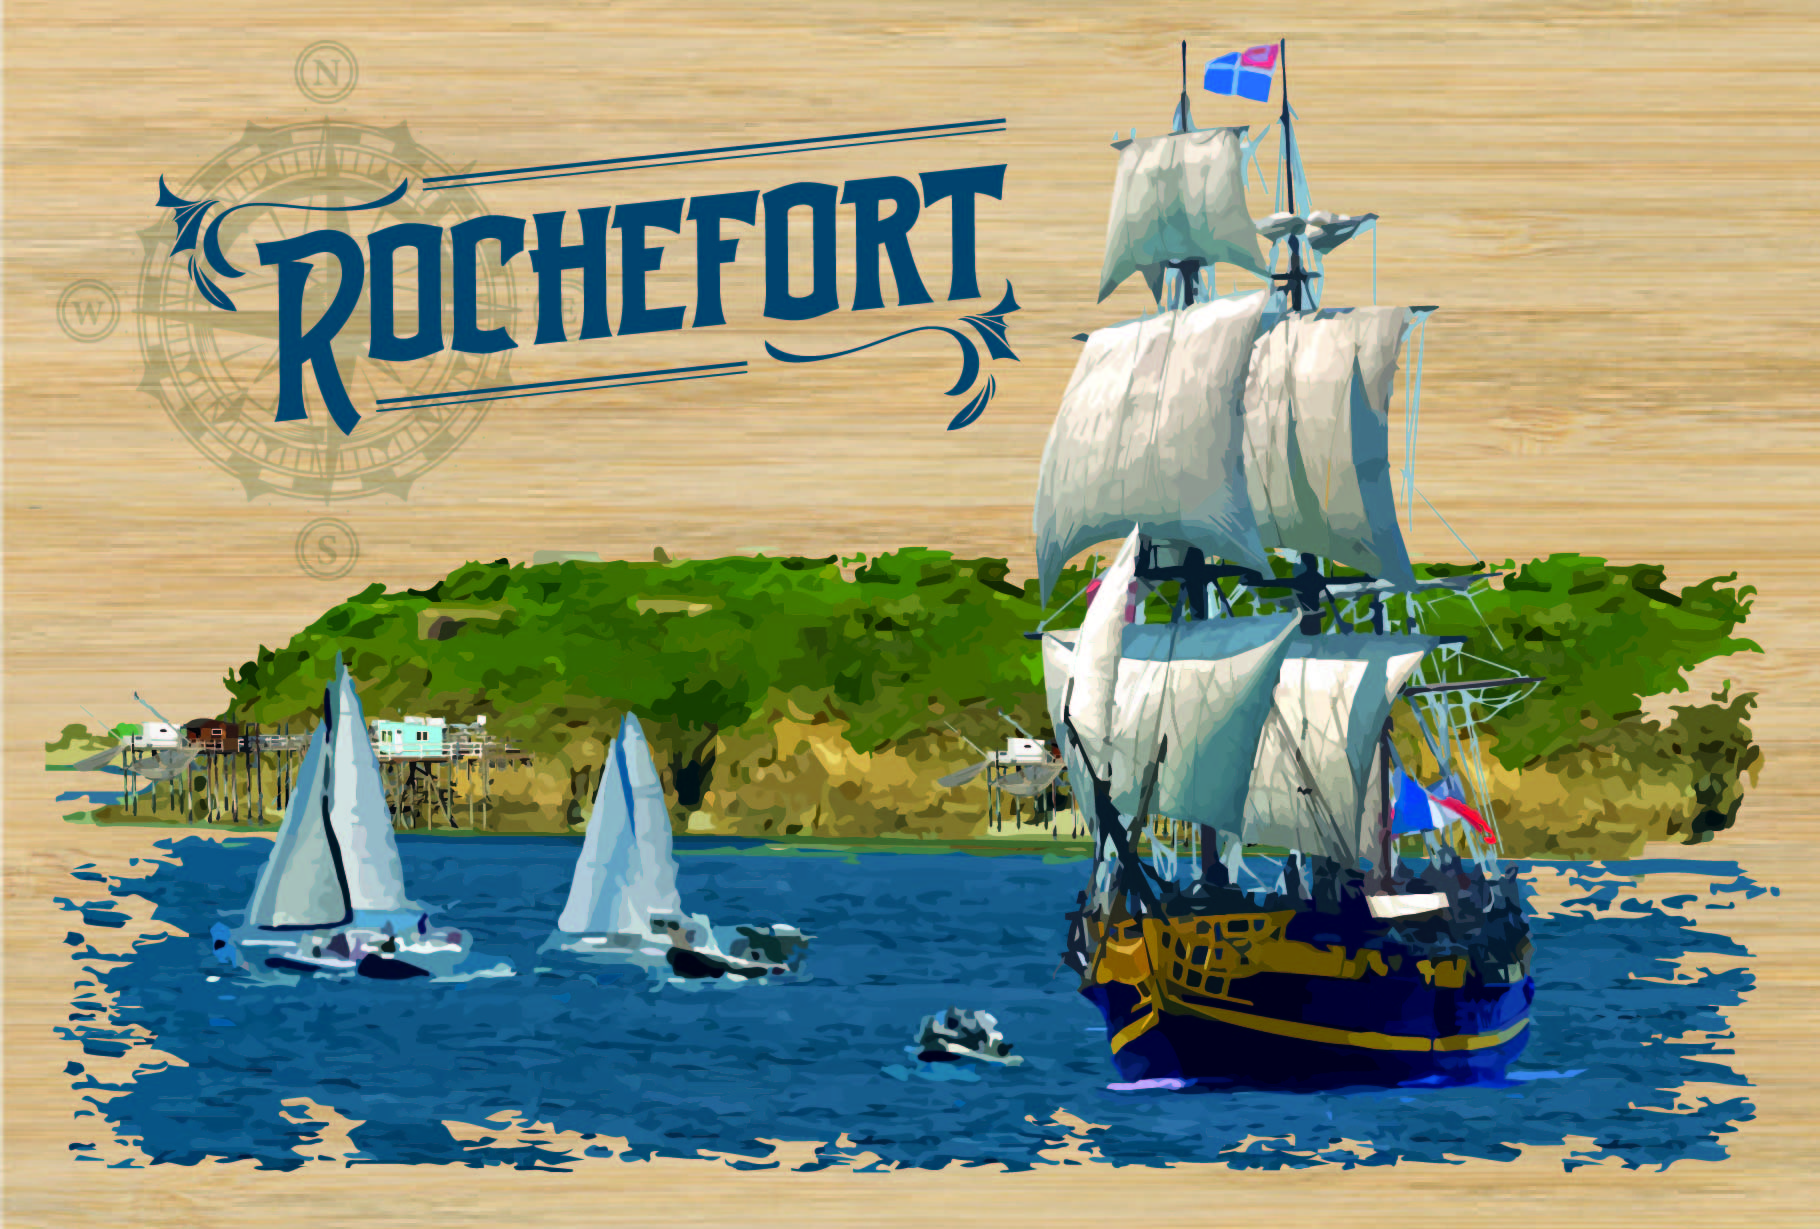 carte postale bois Rochefort